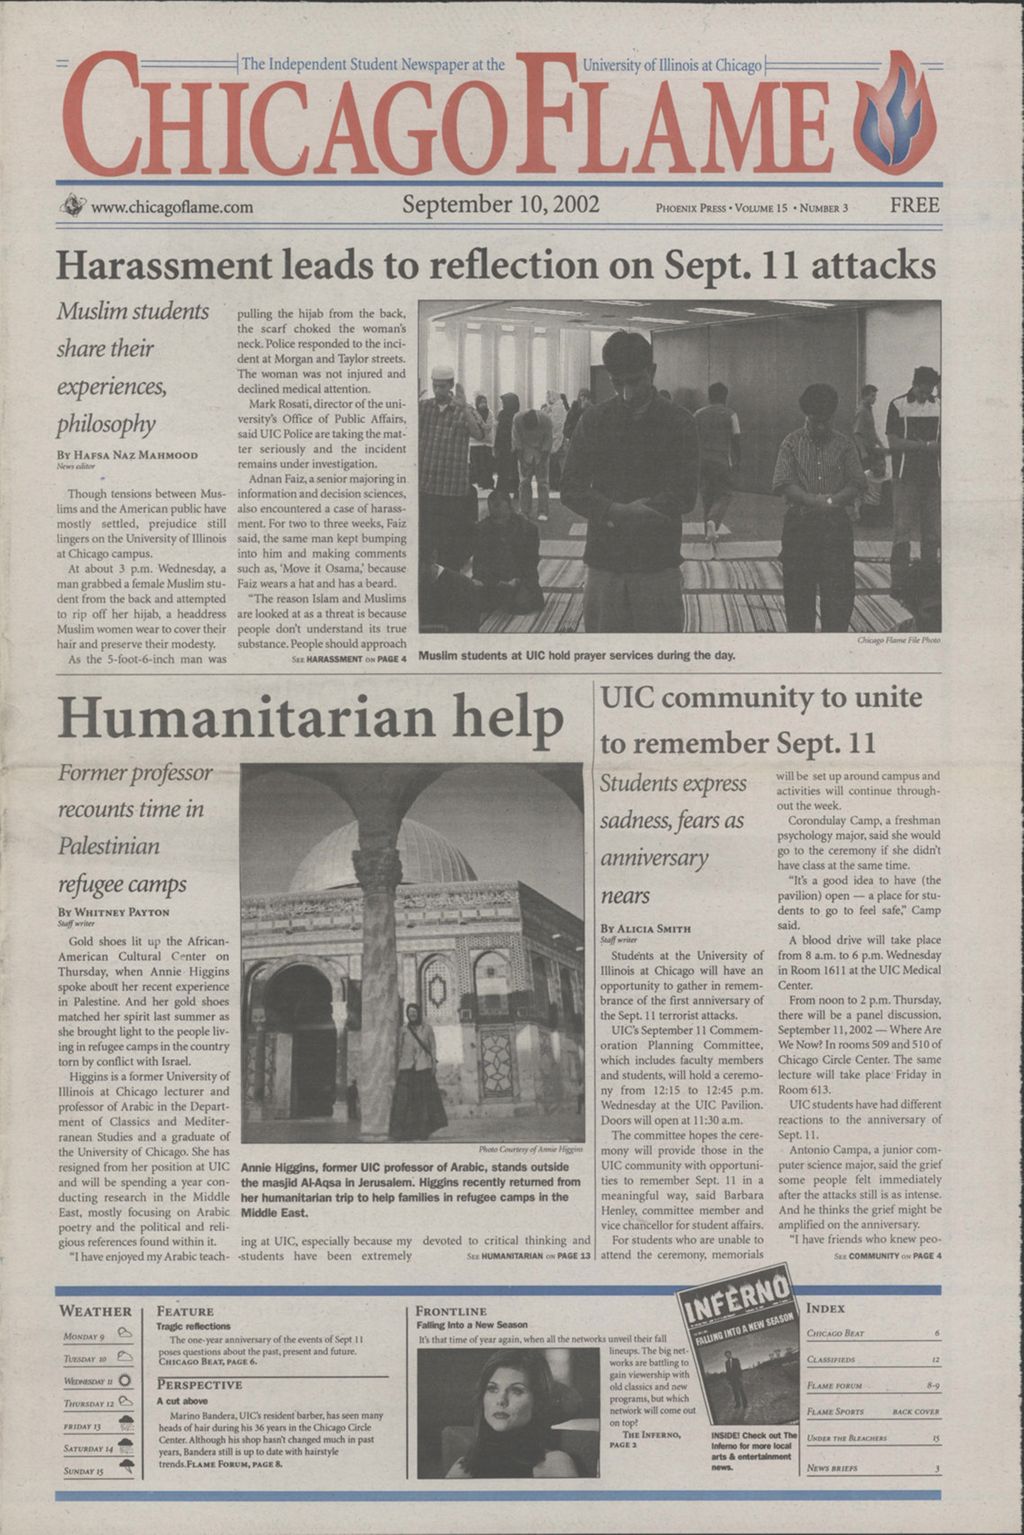 Chicago Flame (September 10, 2002)